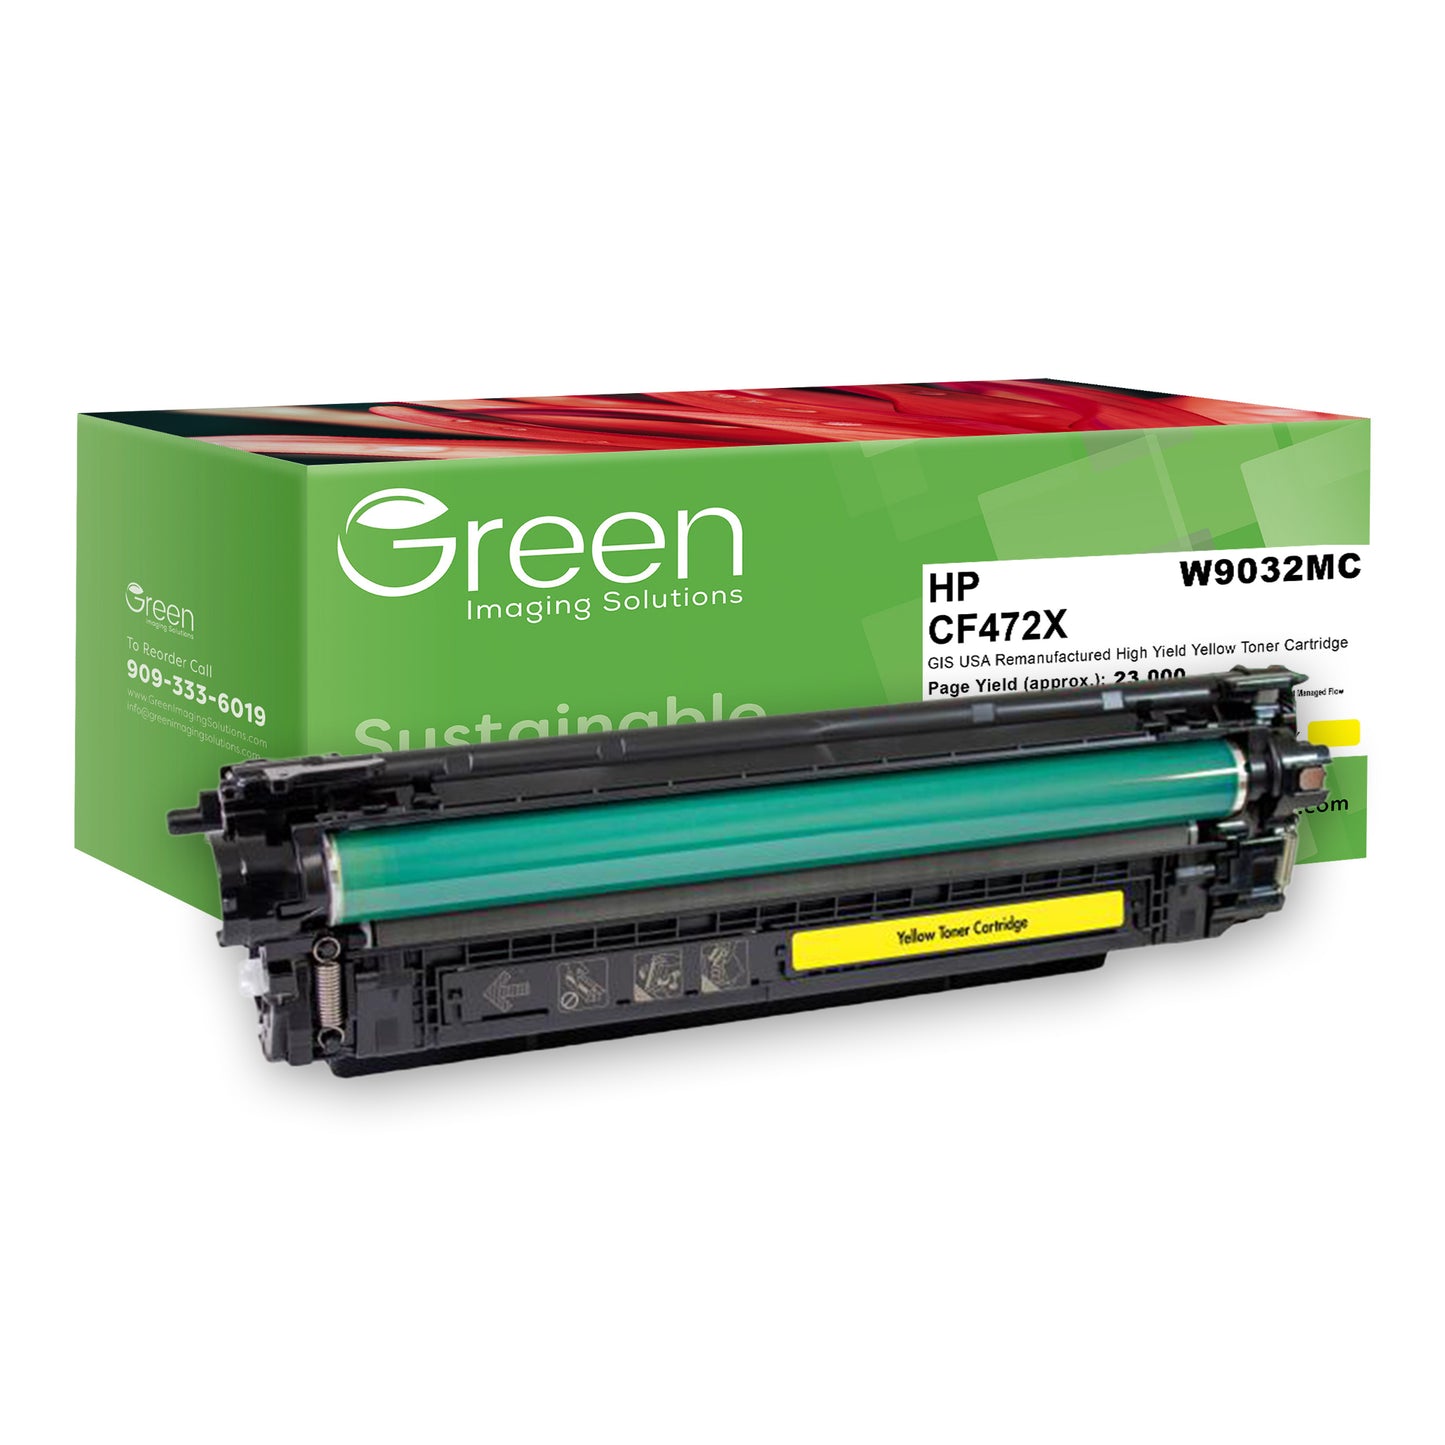 Green Imaging Solutions USA Remanufactured High Yield Yellow Toner Cartridge for HP 657X (CF472X/W9032MC)